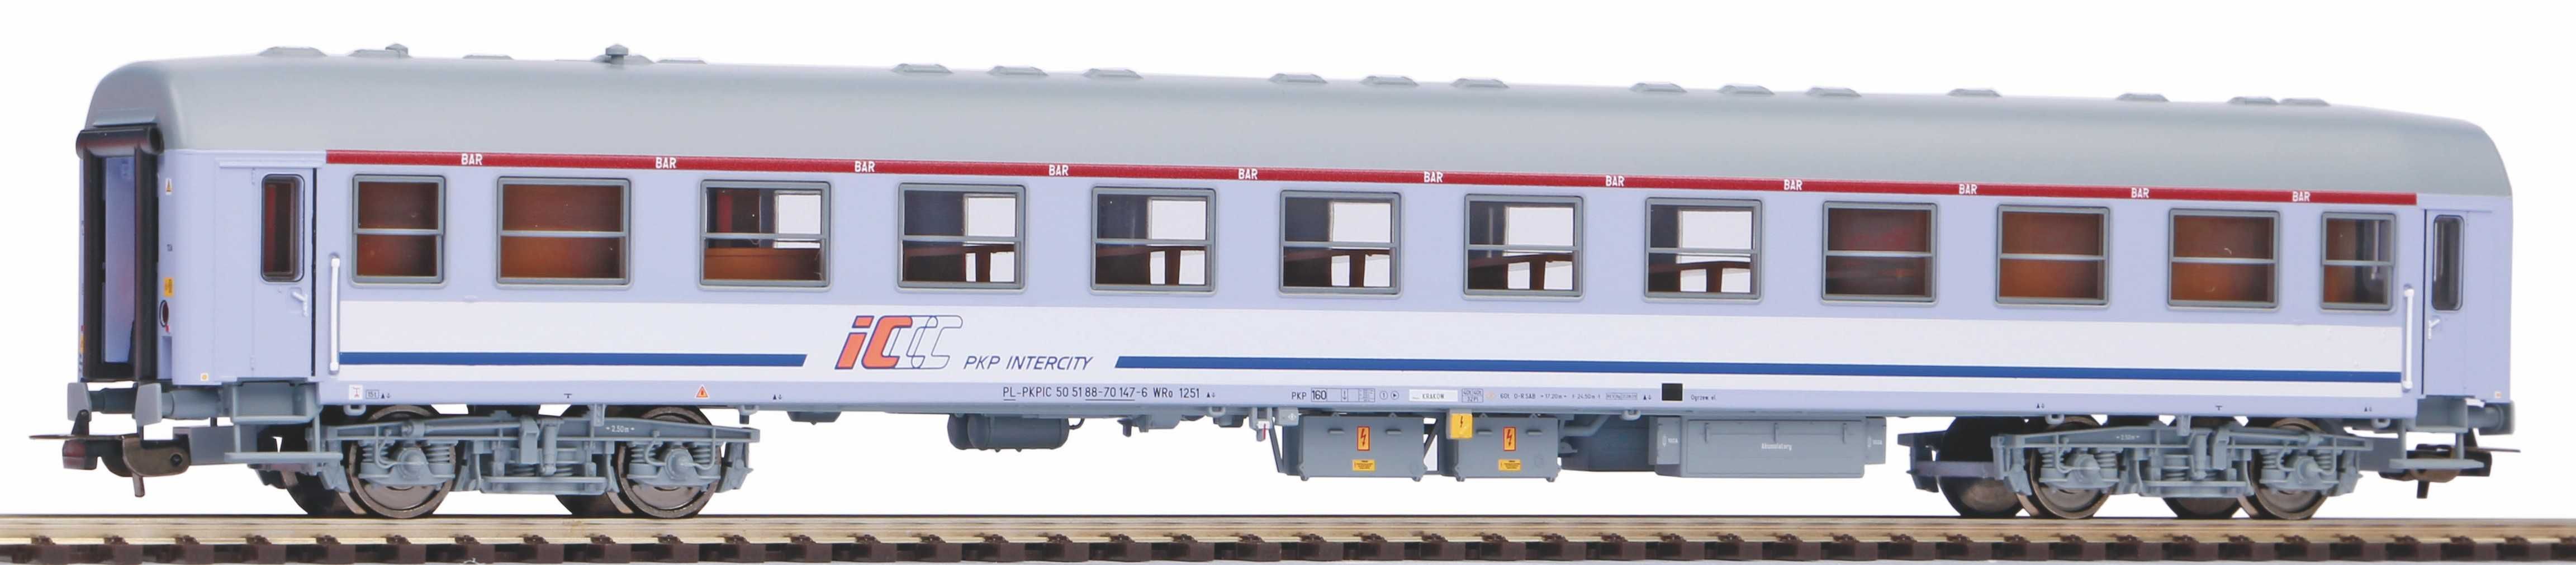 Wagon osobowy H0 PKP Intercity (PIKO 97607)